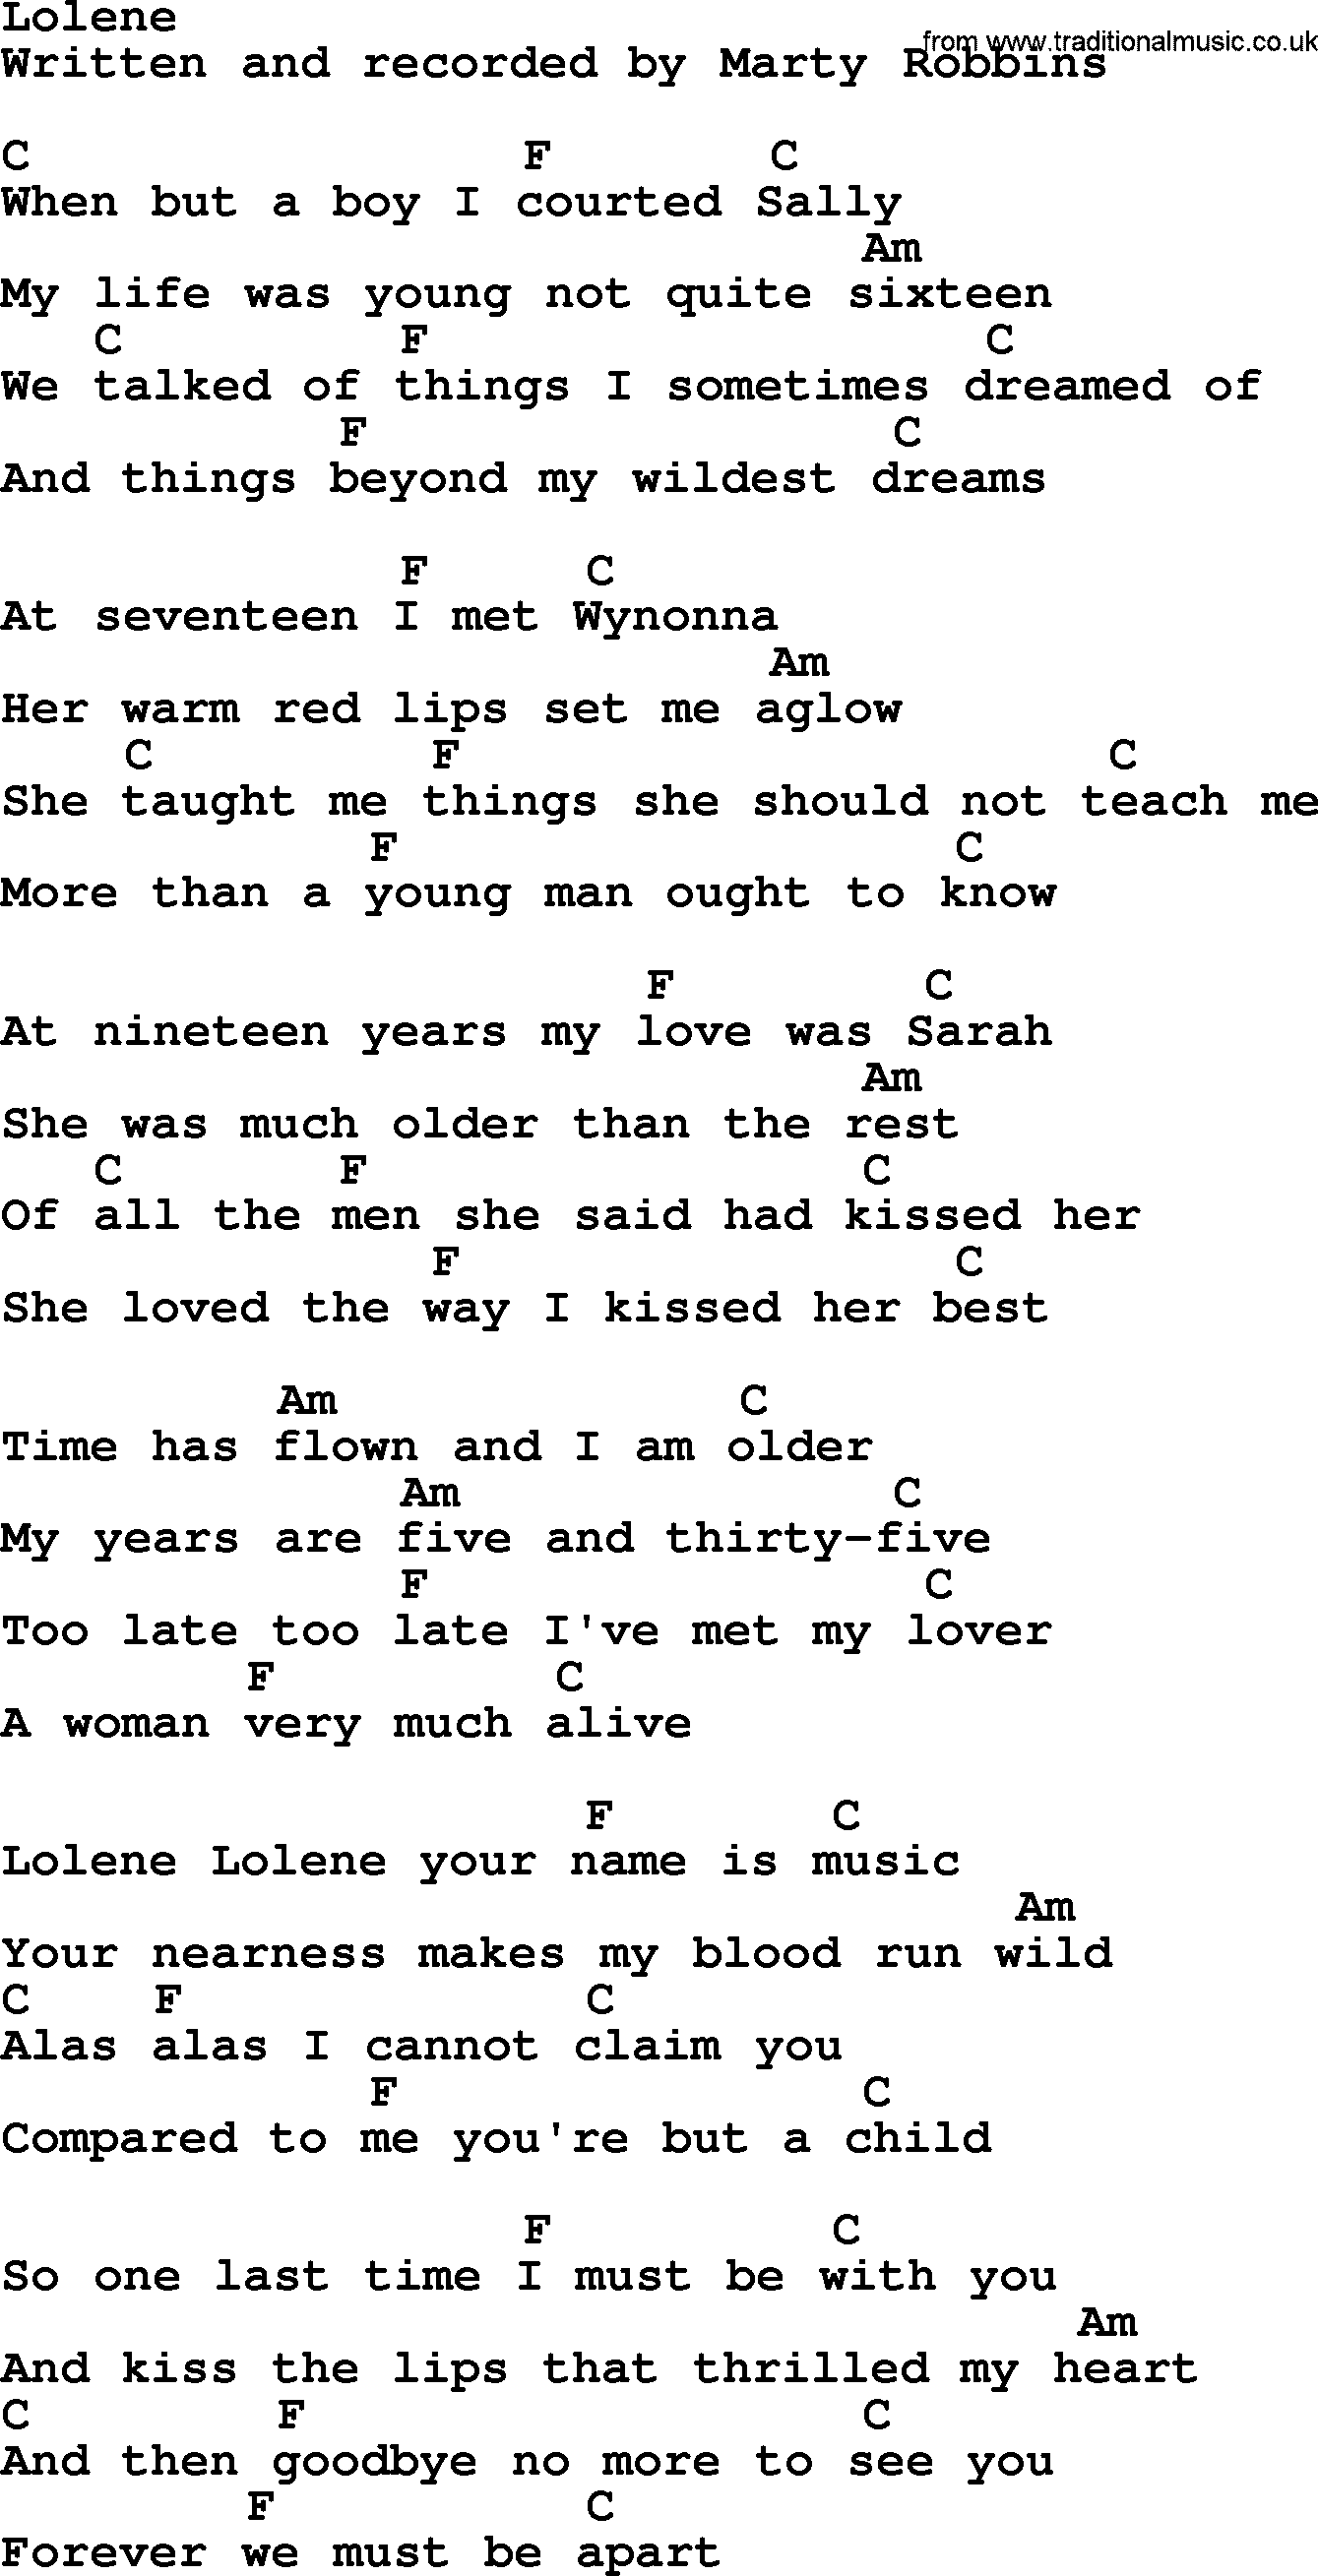 Marty Robbins song: Lolene, lyrics and chords